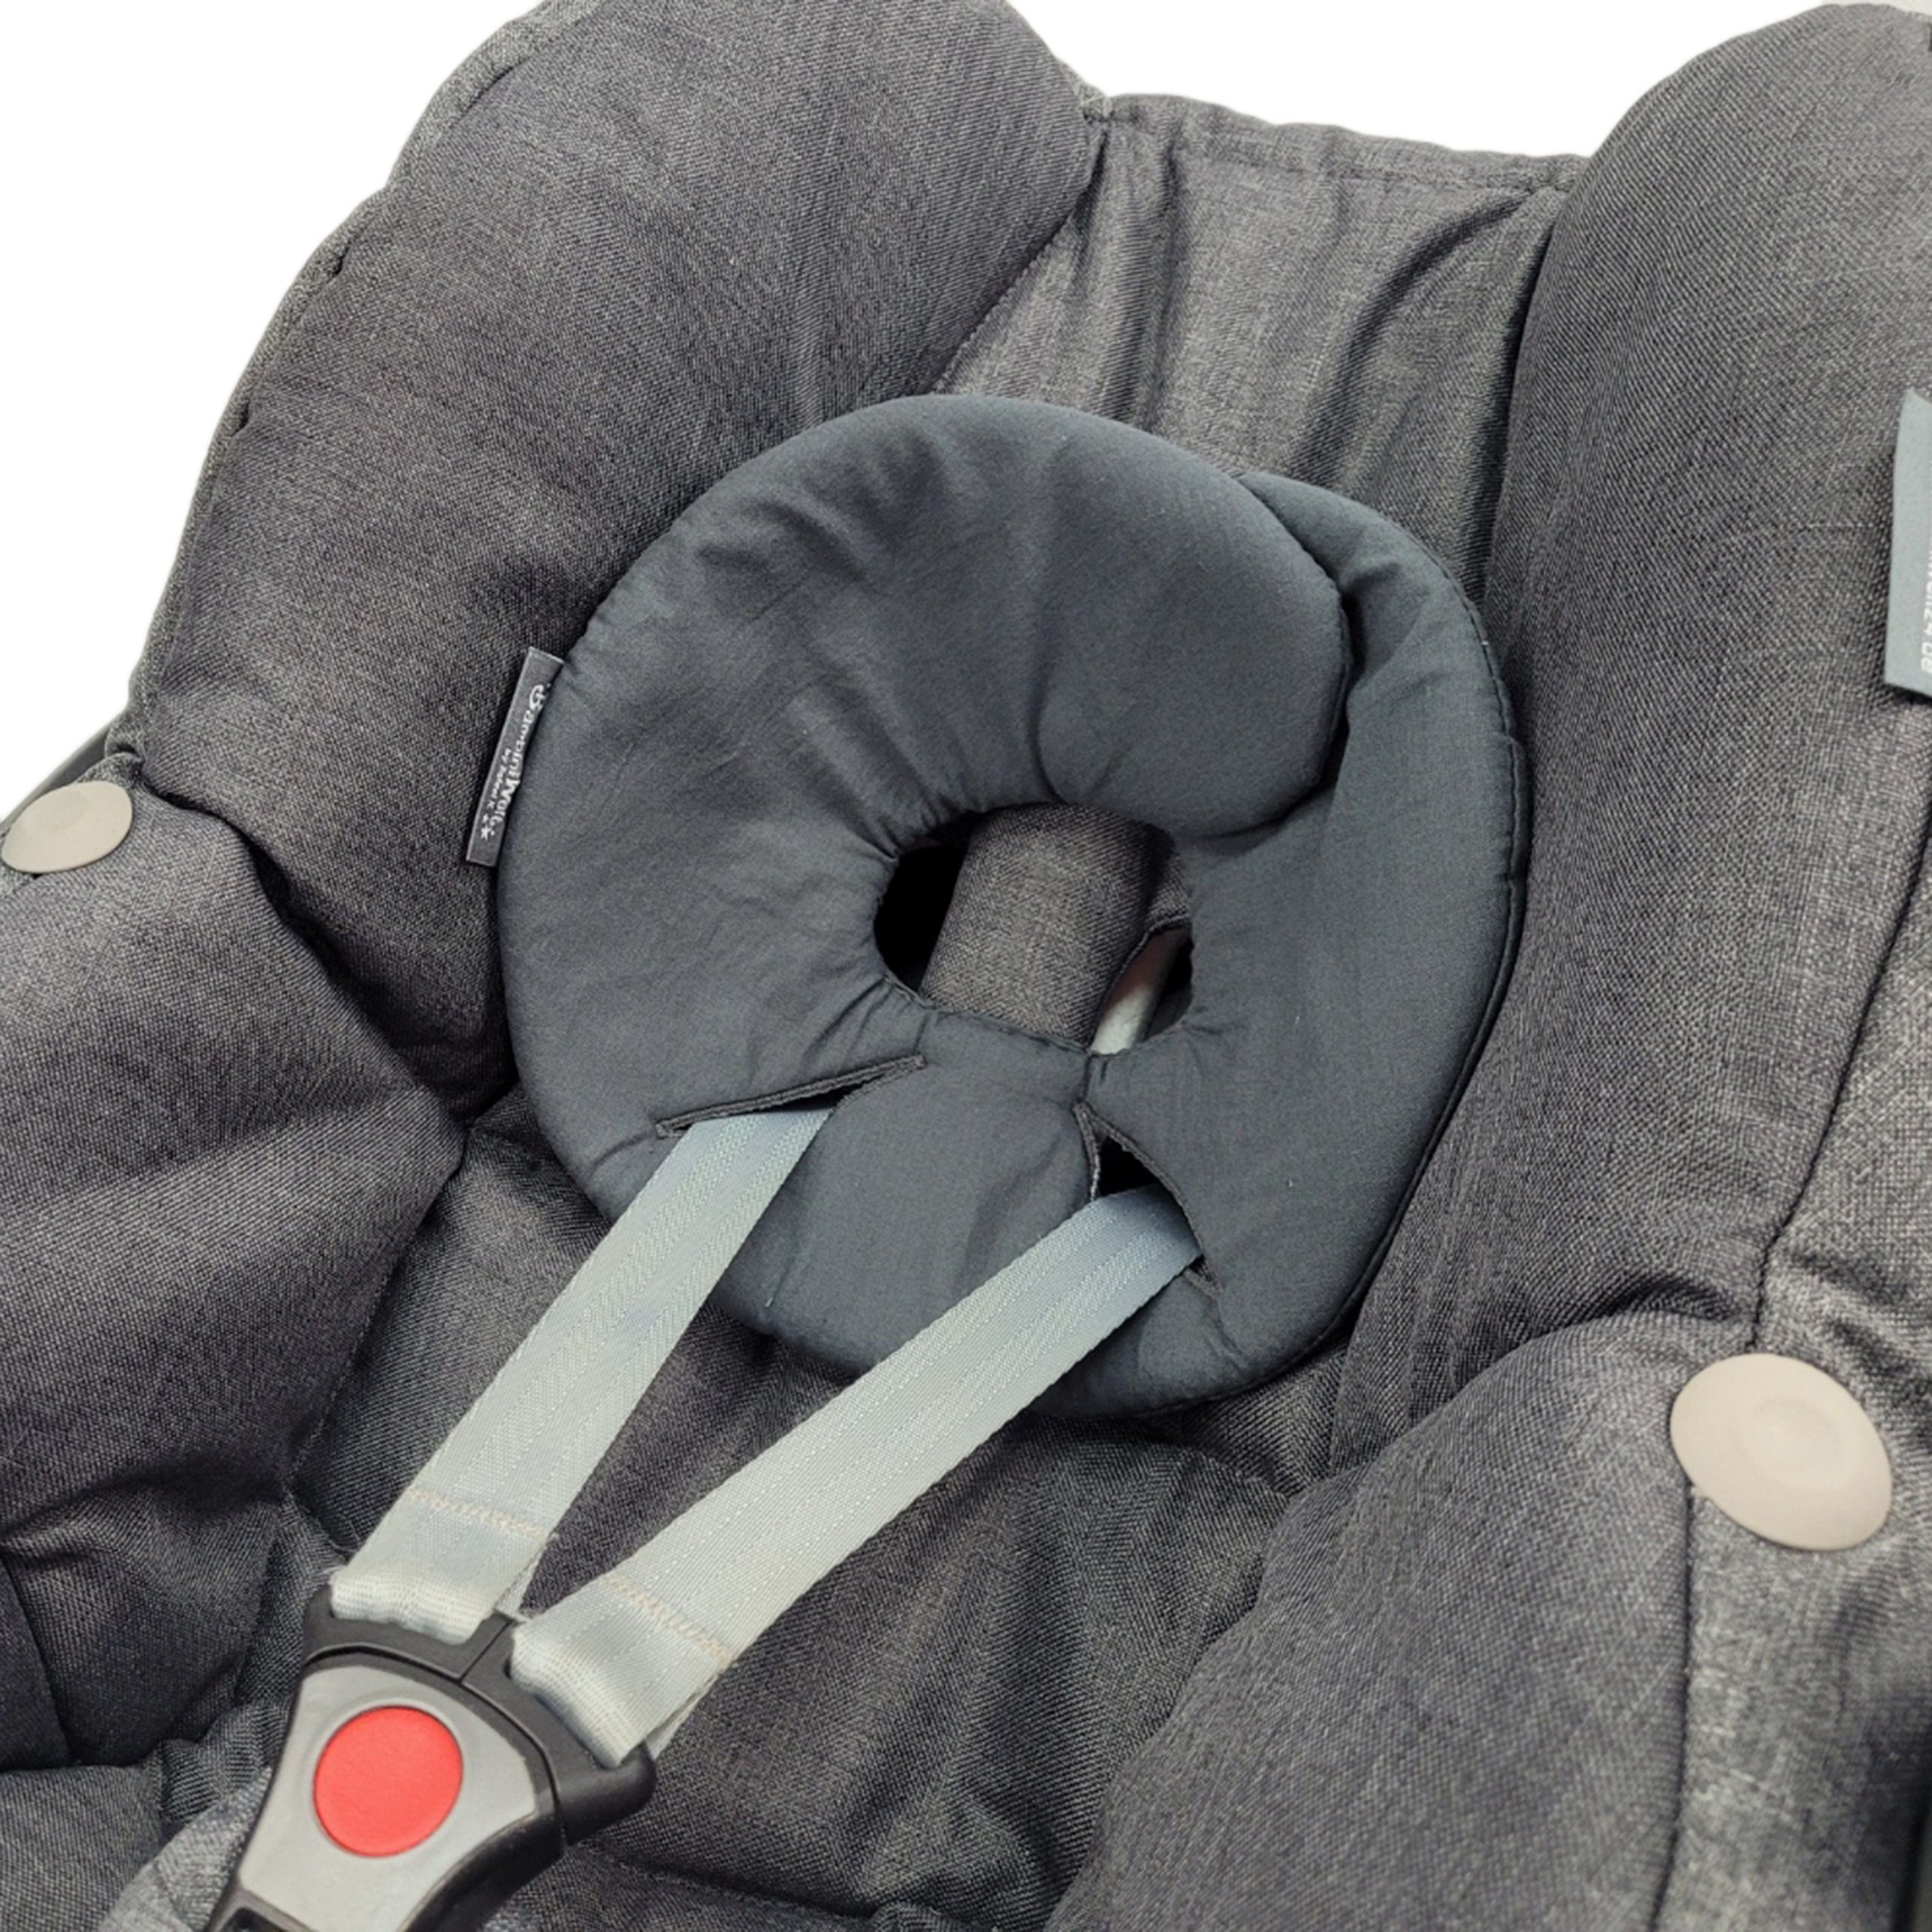 BambiniWelt by Rafael K. Babyschale Kopfpolster für Babyschale kompatibel mit Maxi-Cosi Pebble/Pebble Plus, ab: Geburt, bis: bis ca. 14 Monate